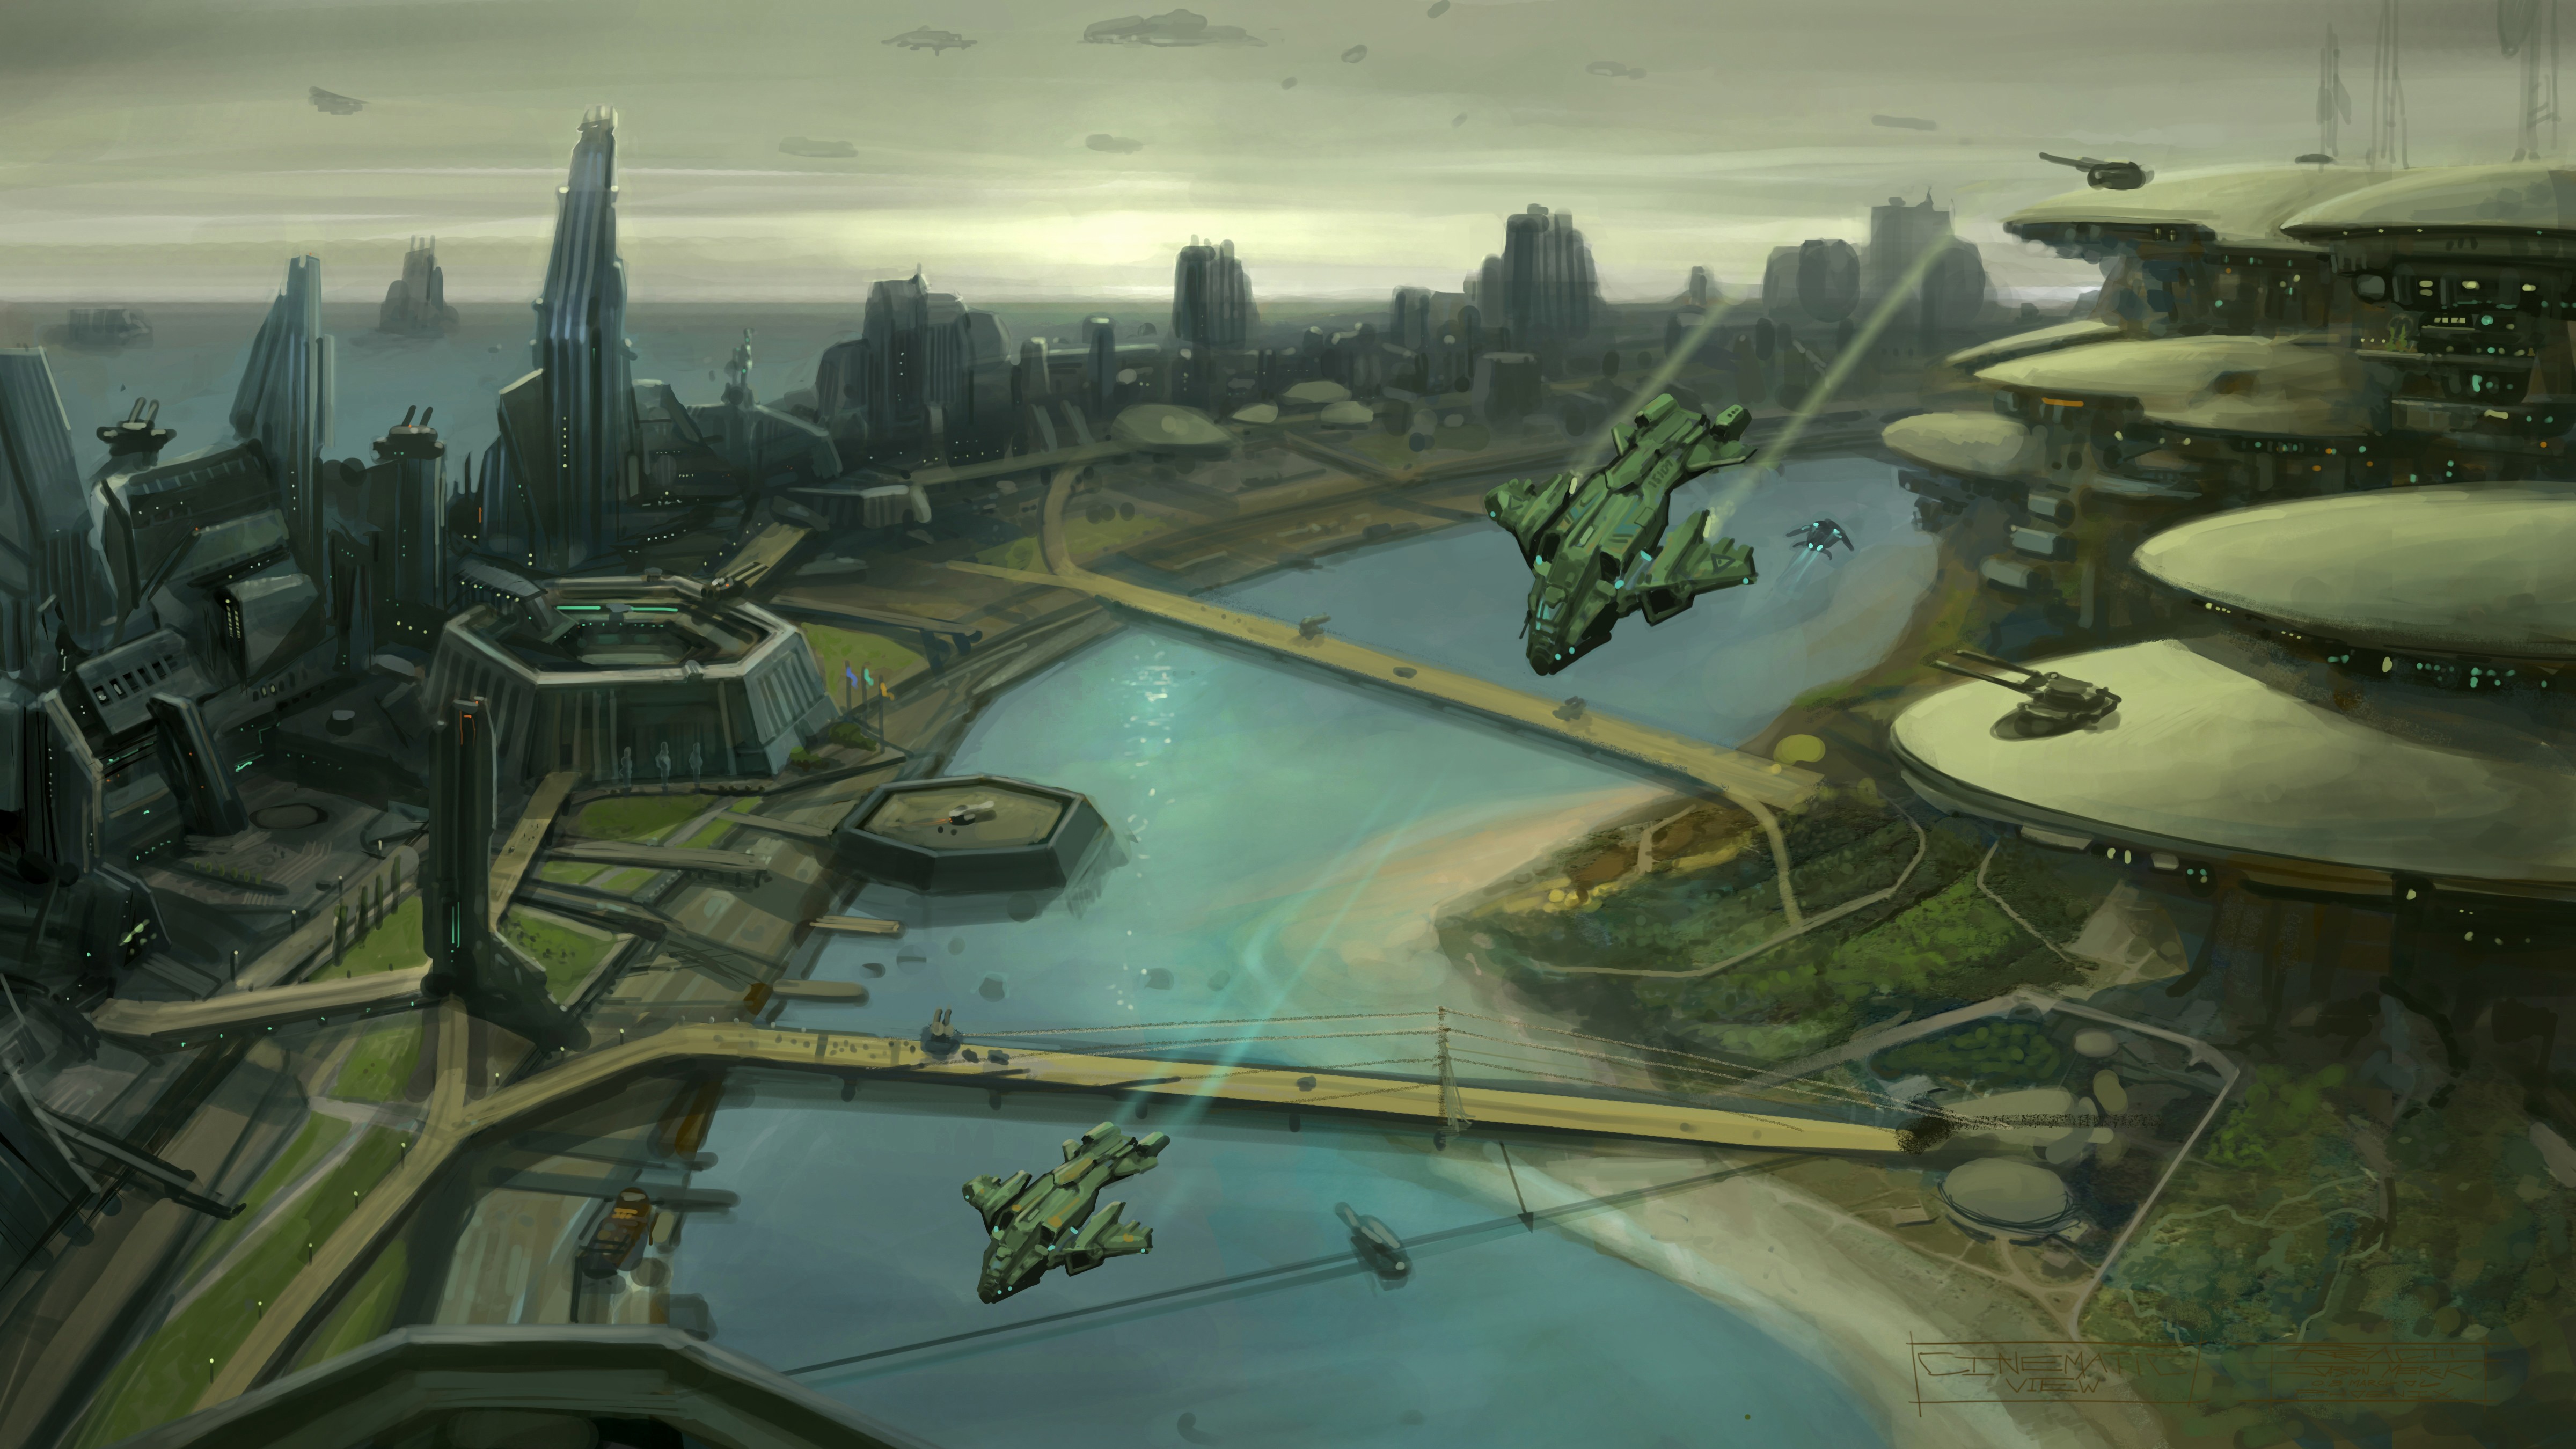 General 4800x2700 digital art futuristic video games Halo Wars landscape cityscape spaceship flying river futuristic city building Halo (game) video game art science fiction